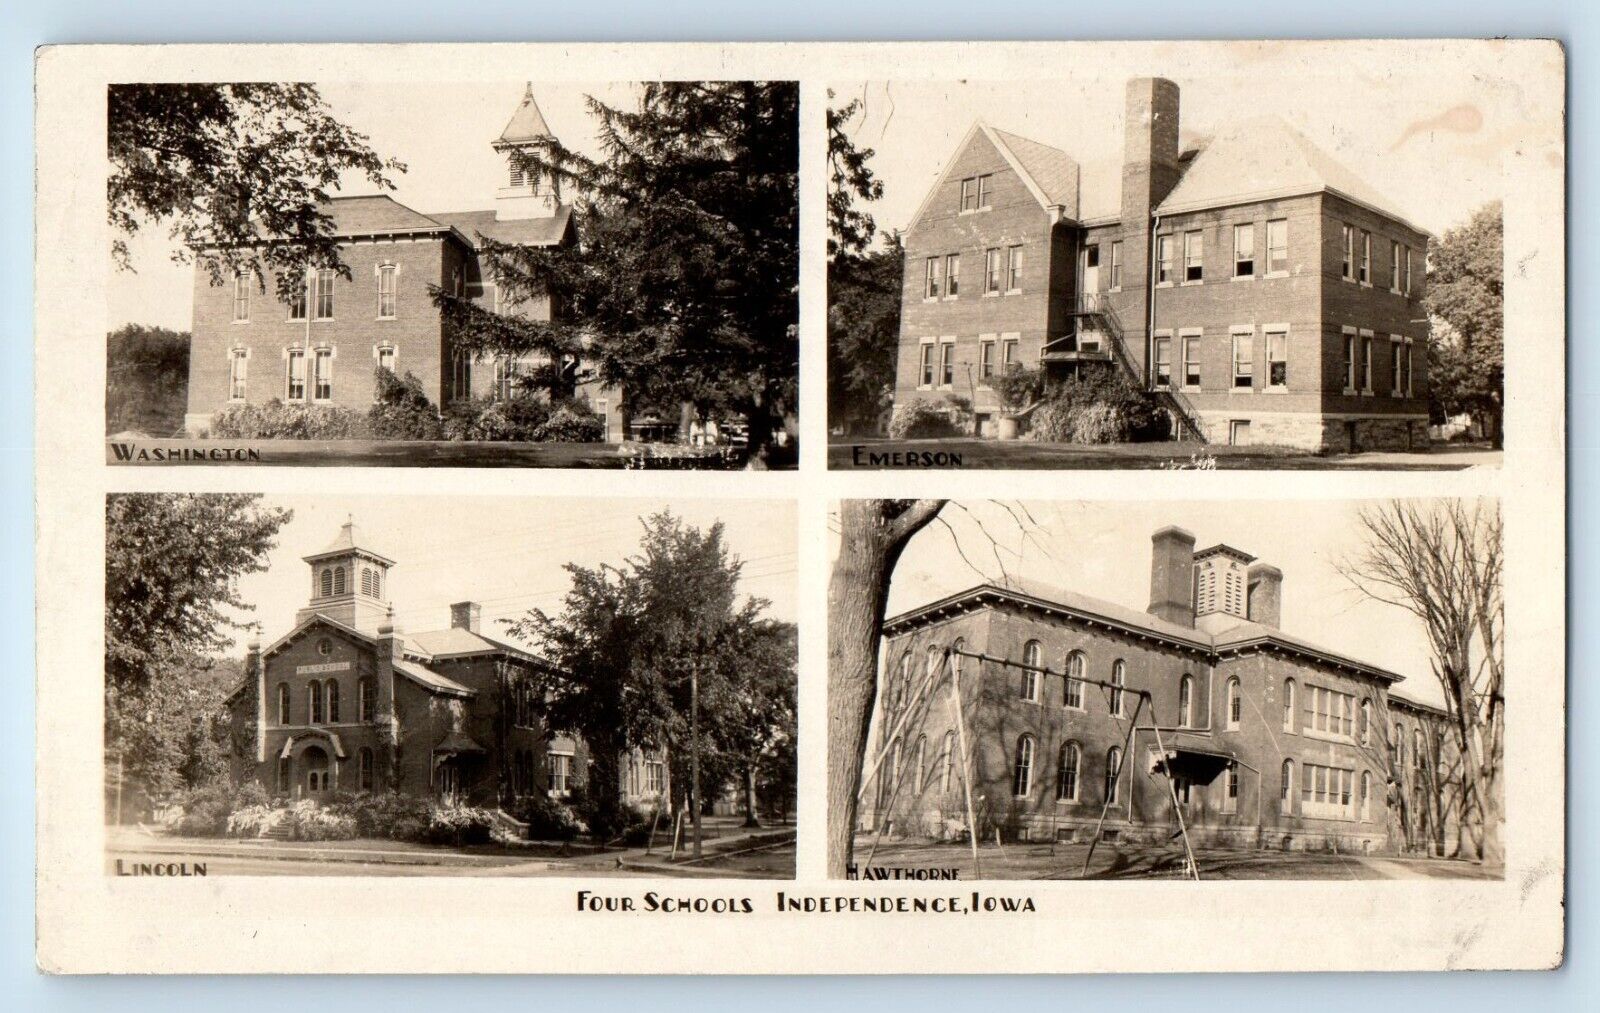 Independence Iowa IA Postcard RPPC Photo Four Schools Buildings Multiview c1940s